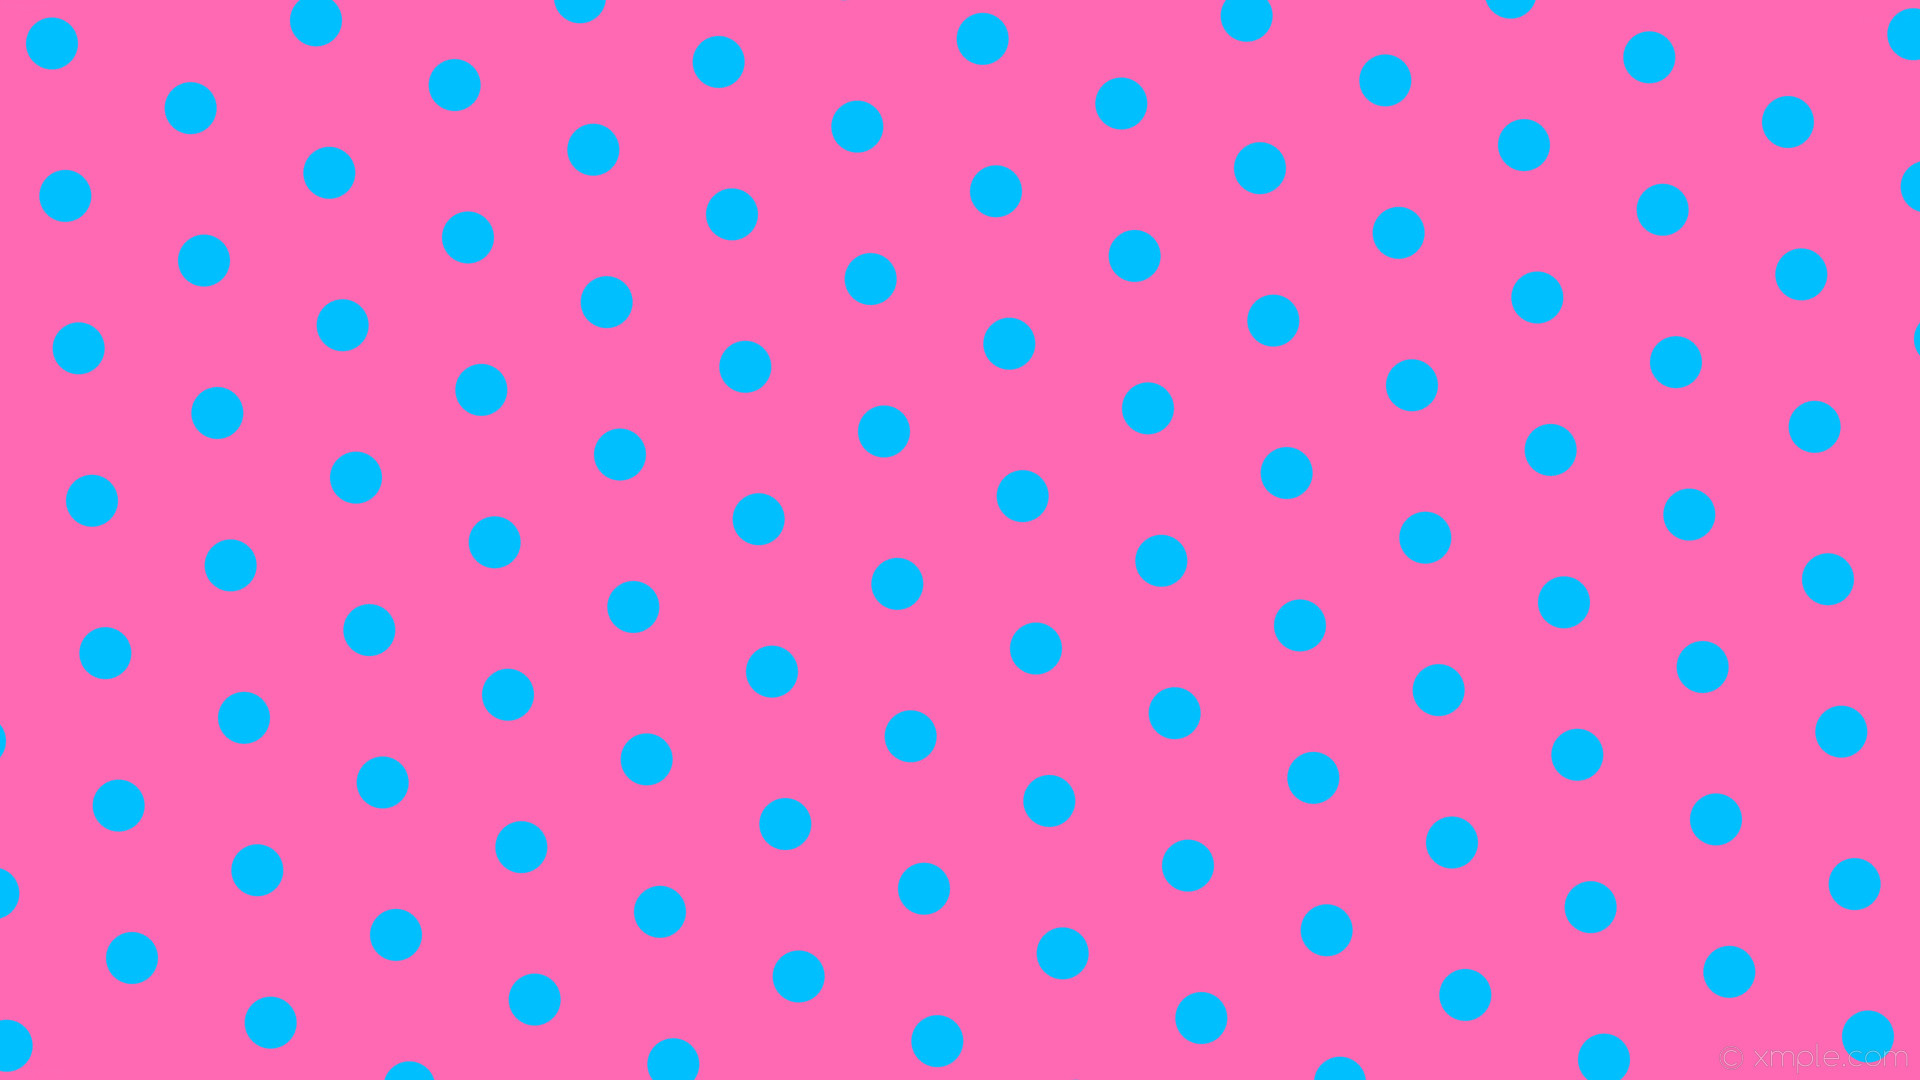 1920x1080 wallpaper hexagon blue polka pink dots hot pink deep sky blue #ff69b4  #00bfff diagonal